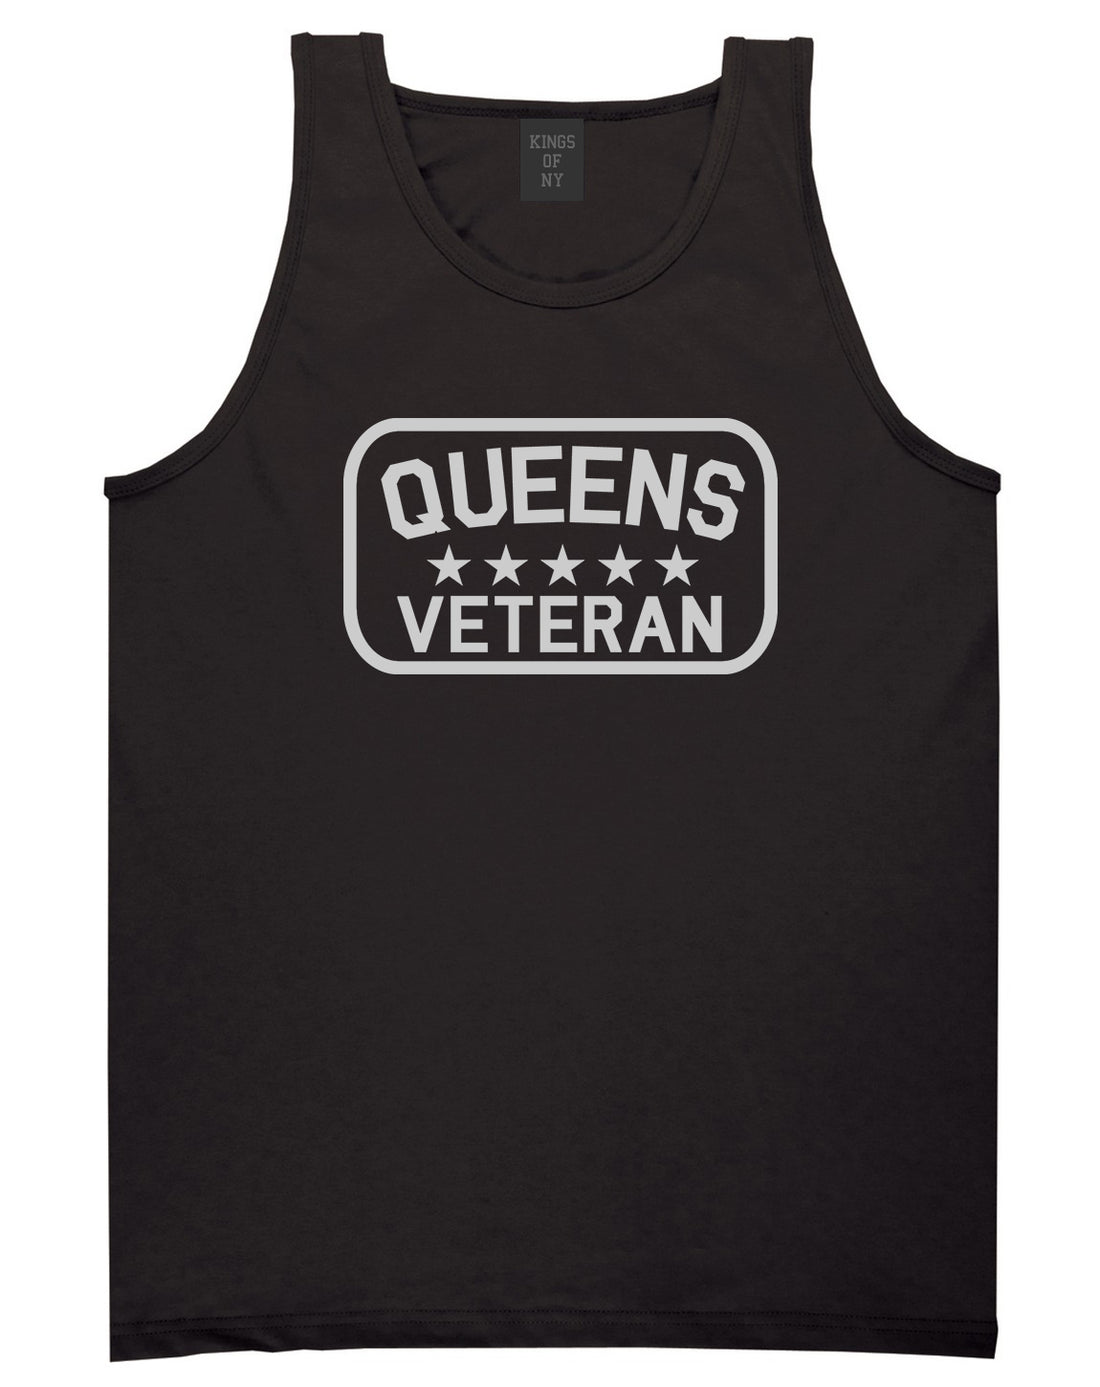 Queens Veteran Mens Tank Top Shirt Black